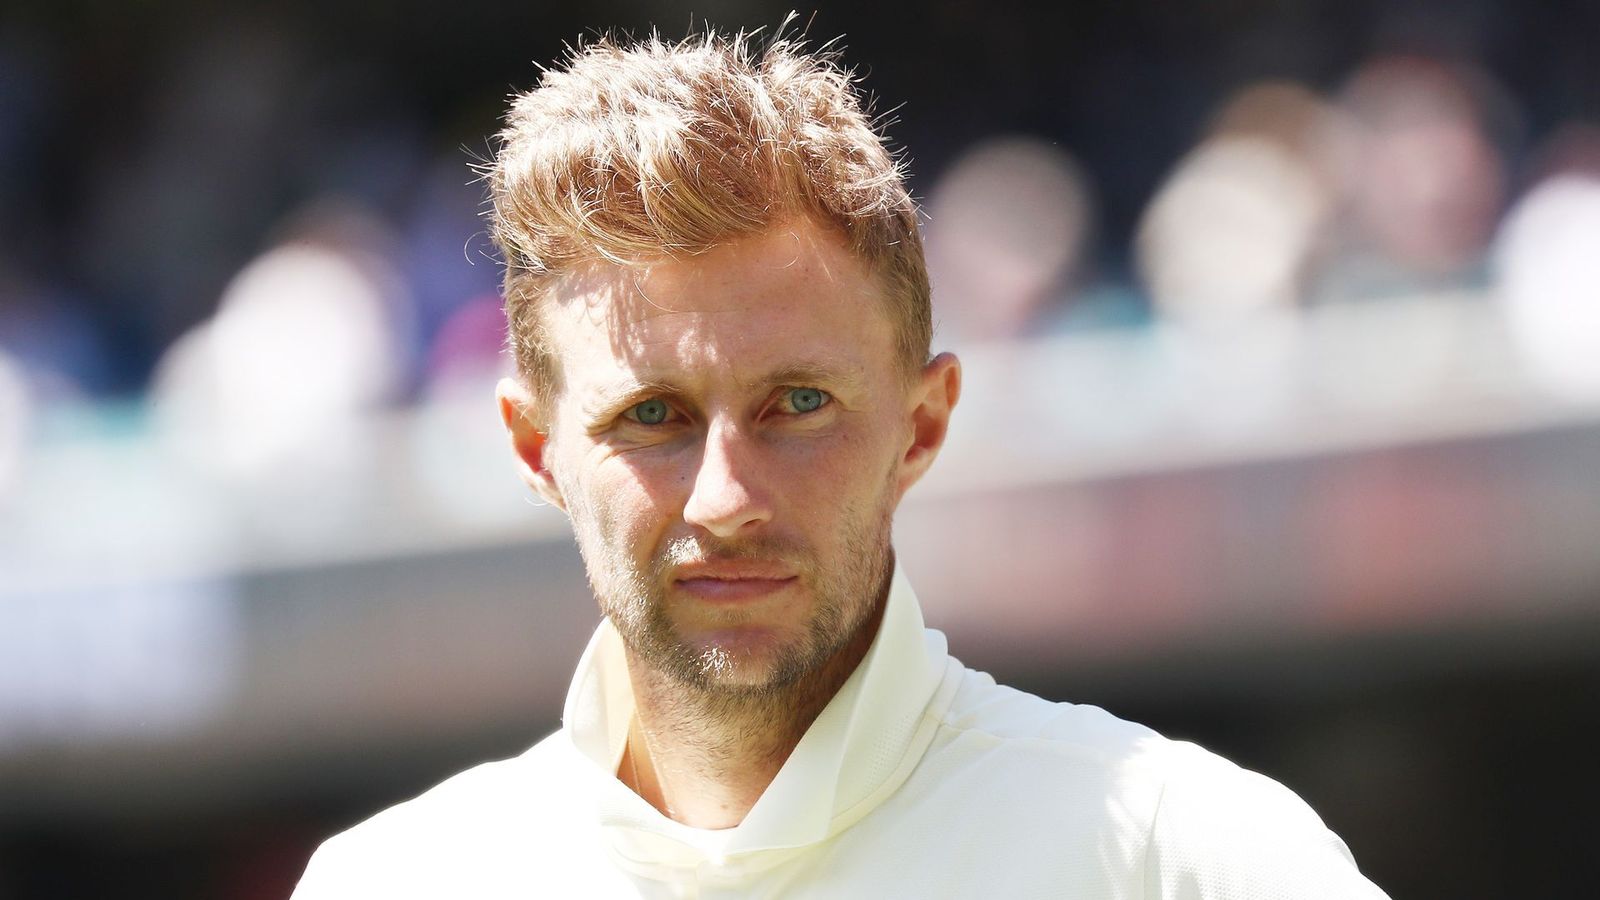 Cricket takes 'toll' on Joe Root England Captain | News UK Video News ...